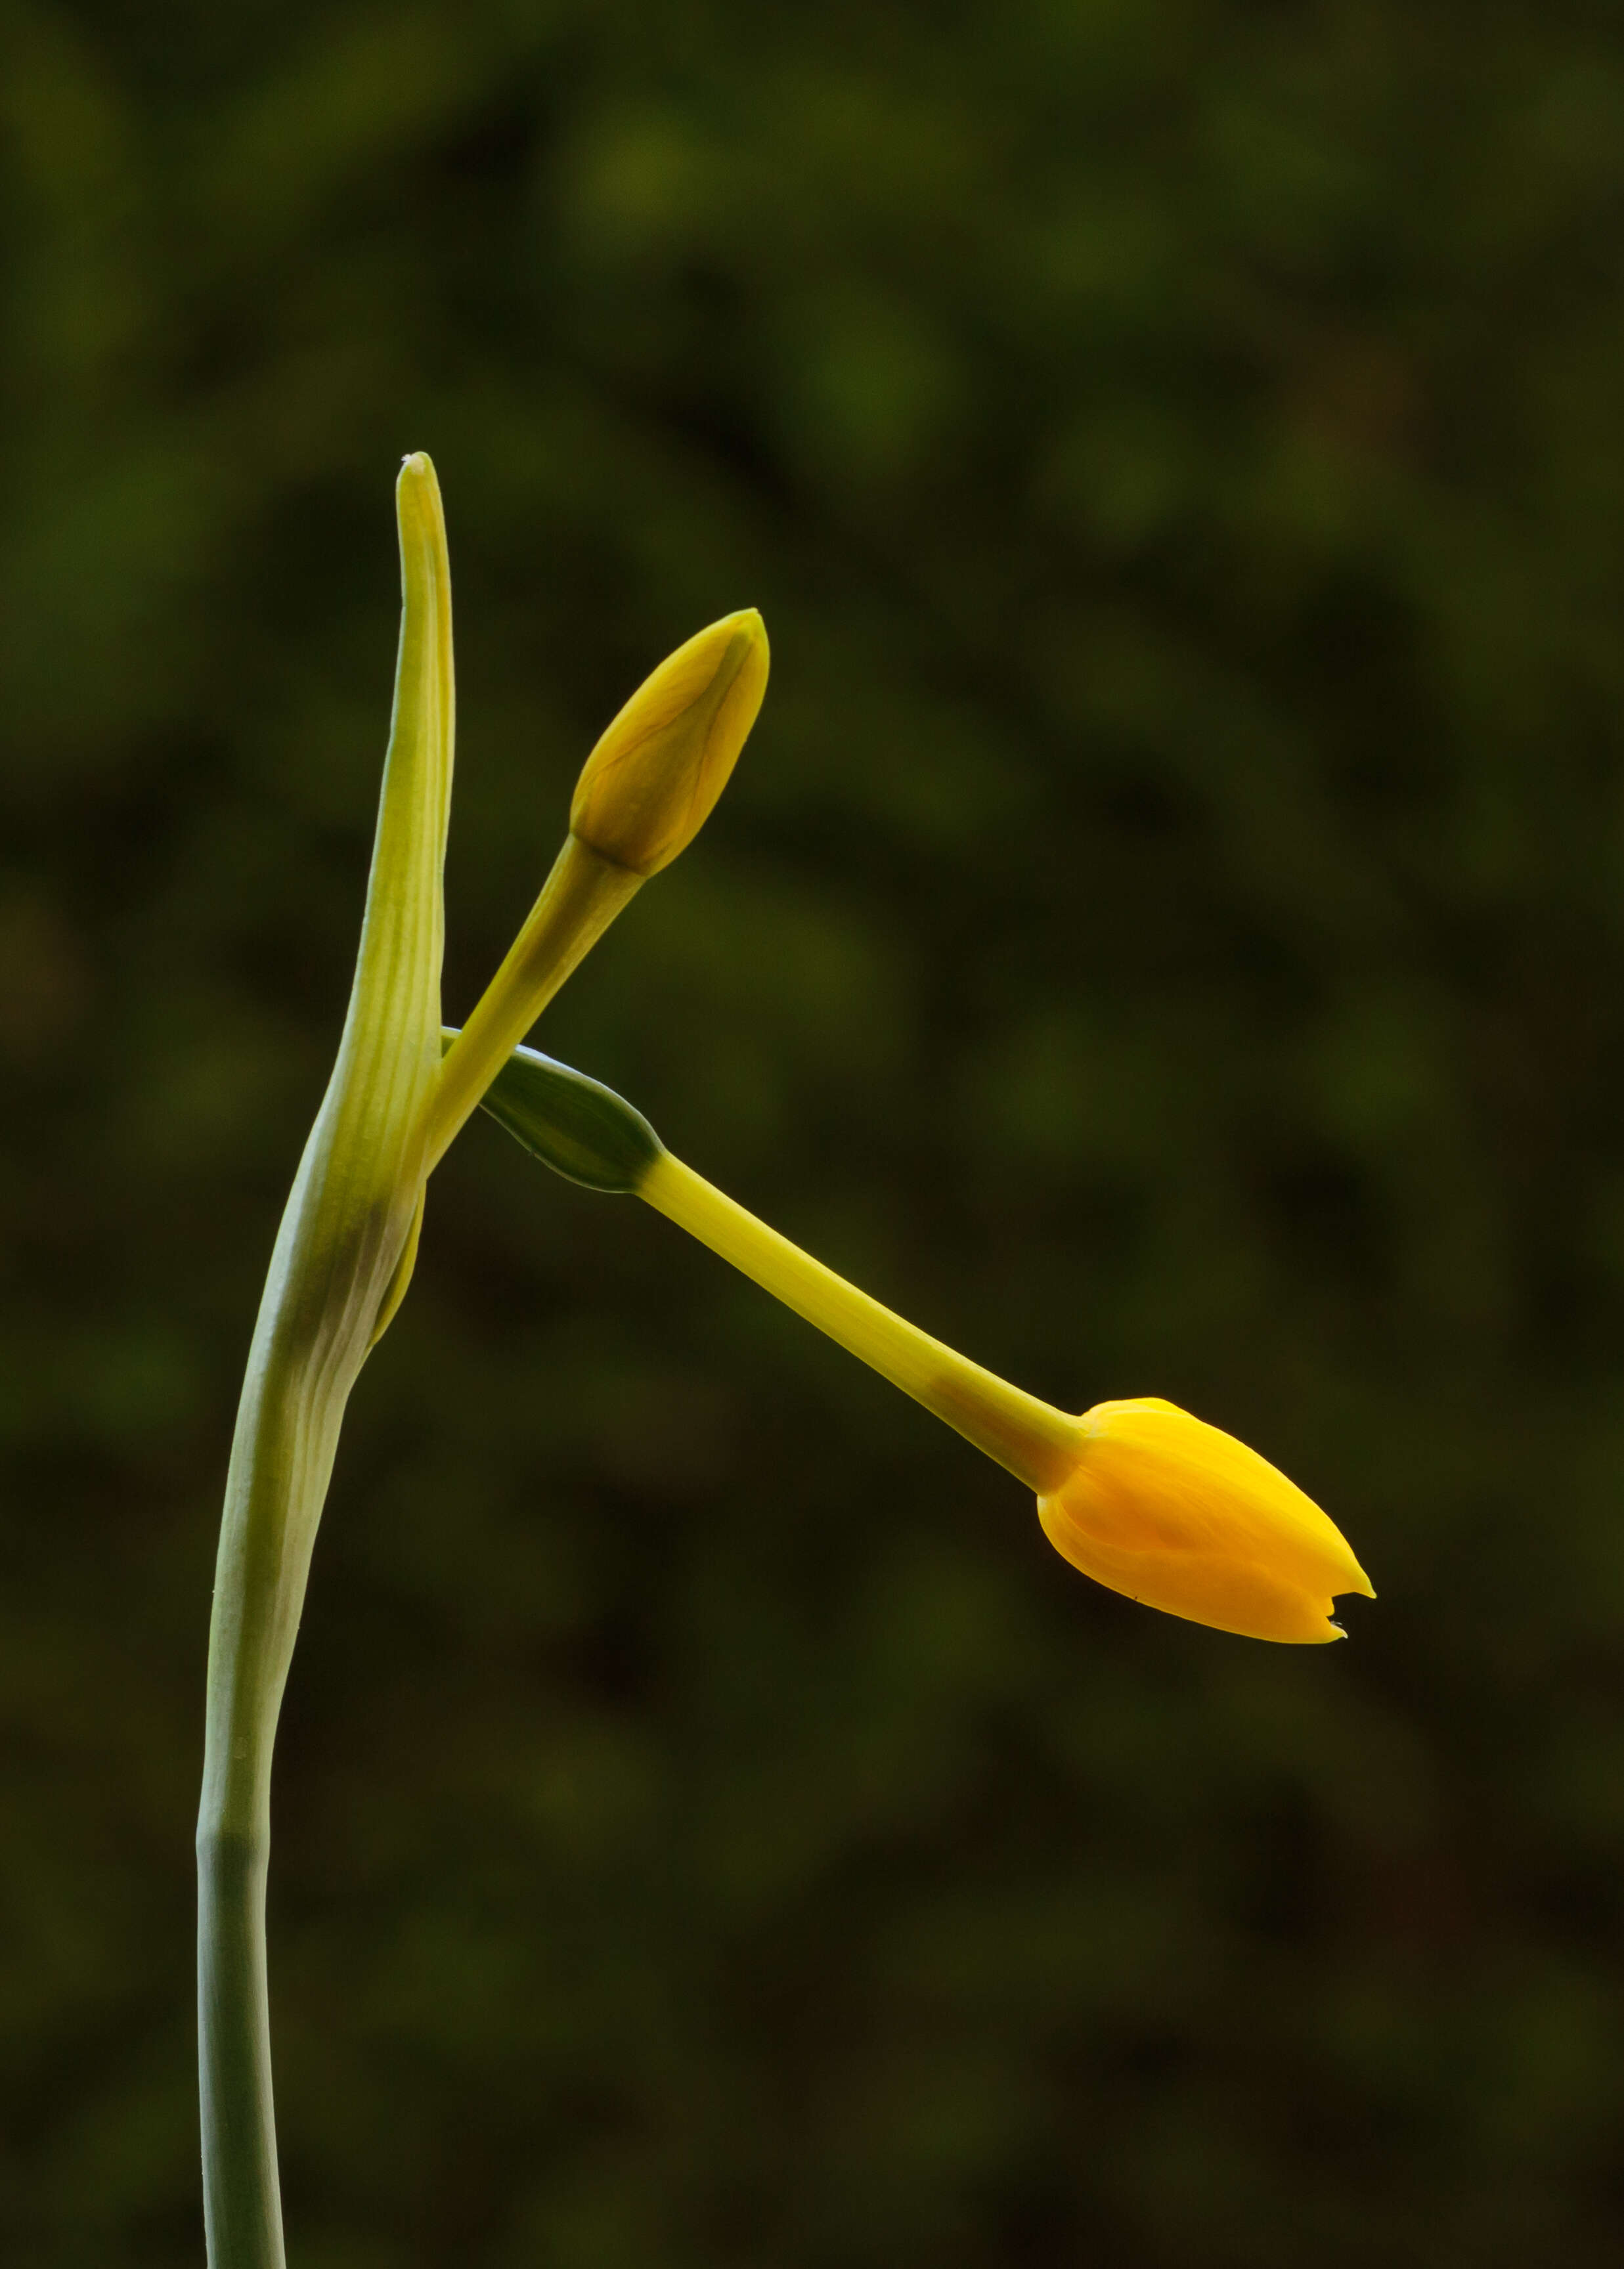 Image de Narcissus jonquilla L.